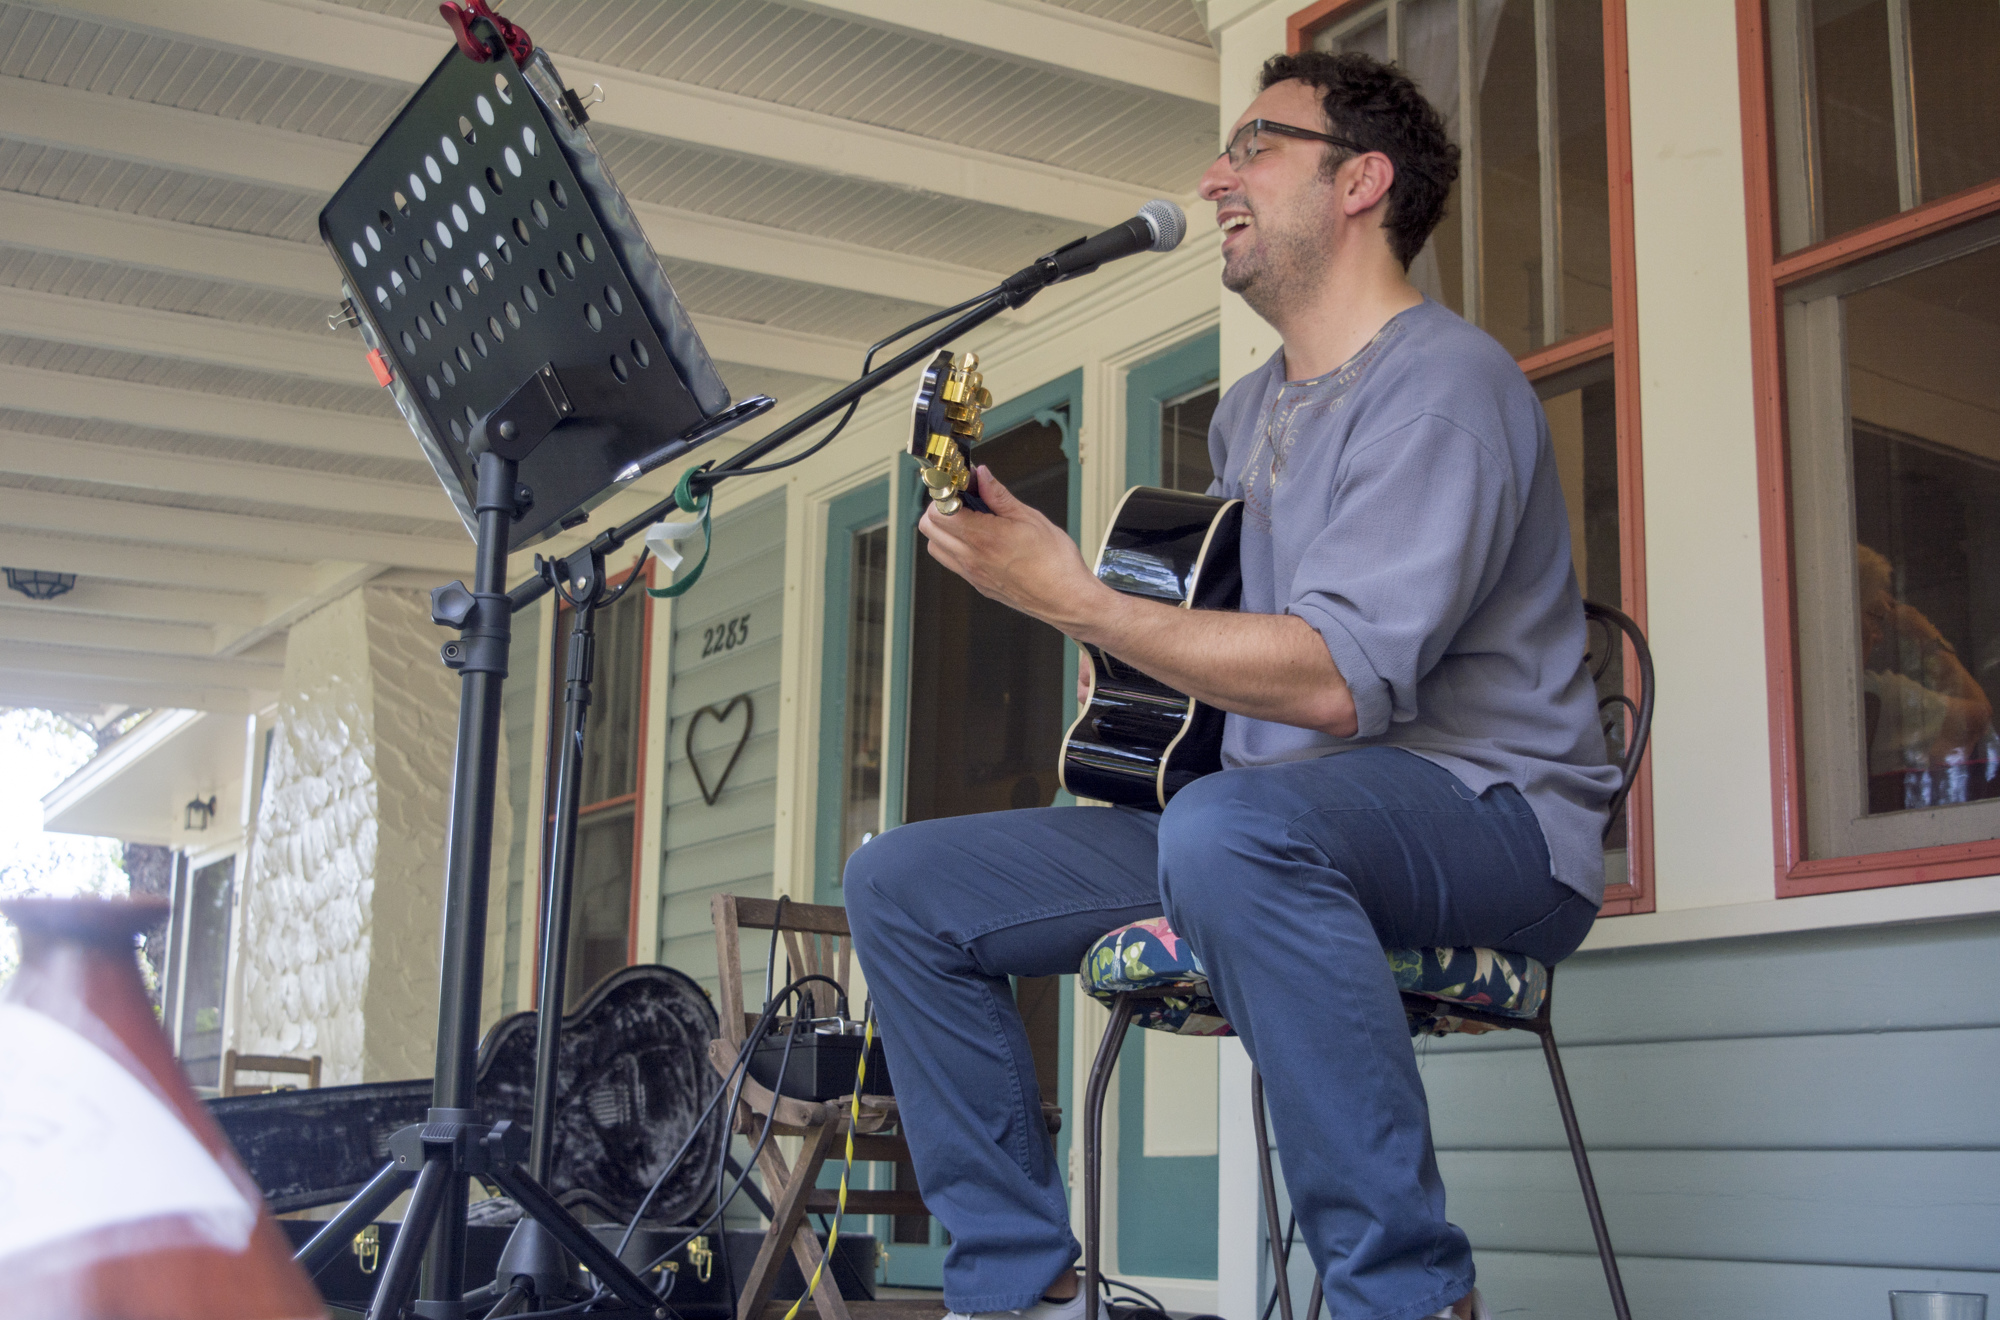 Marcellus Salerni performs during the second annual Arlington Park Porchfest.